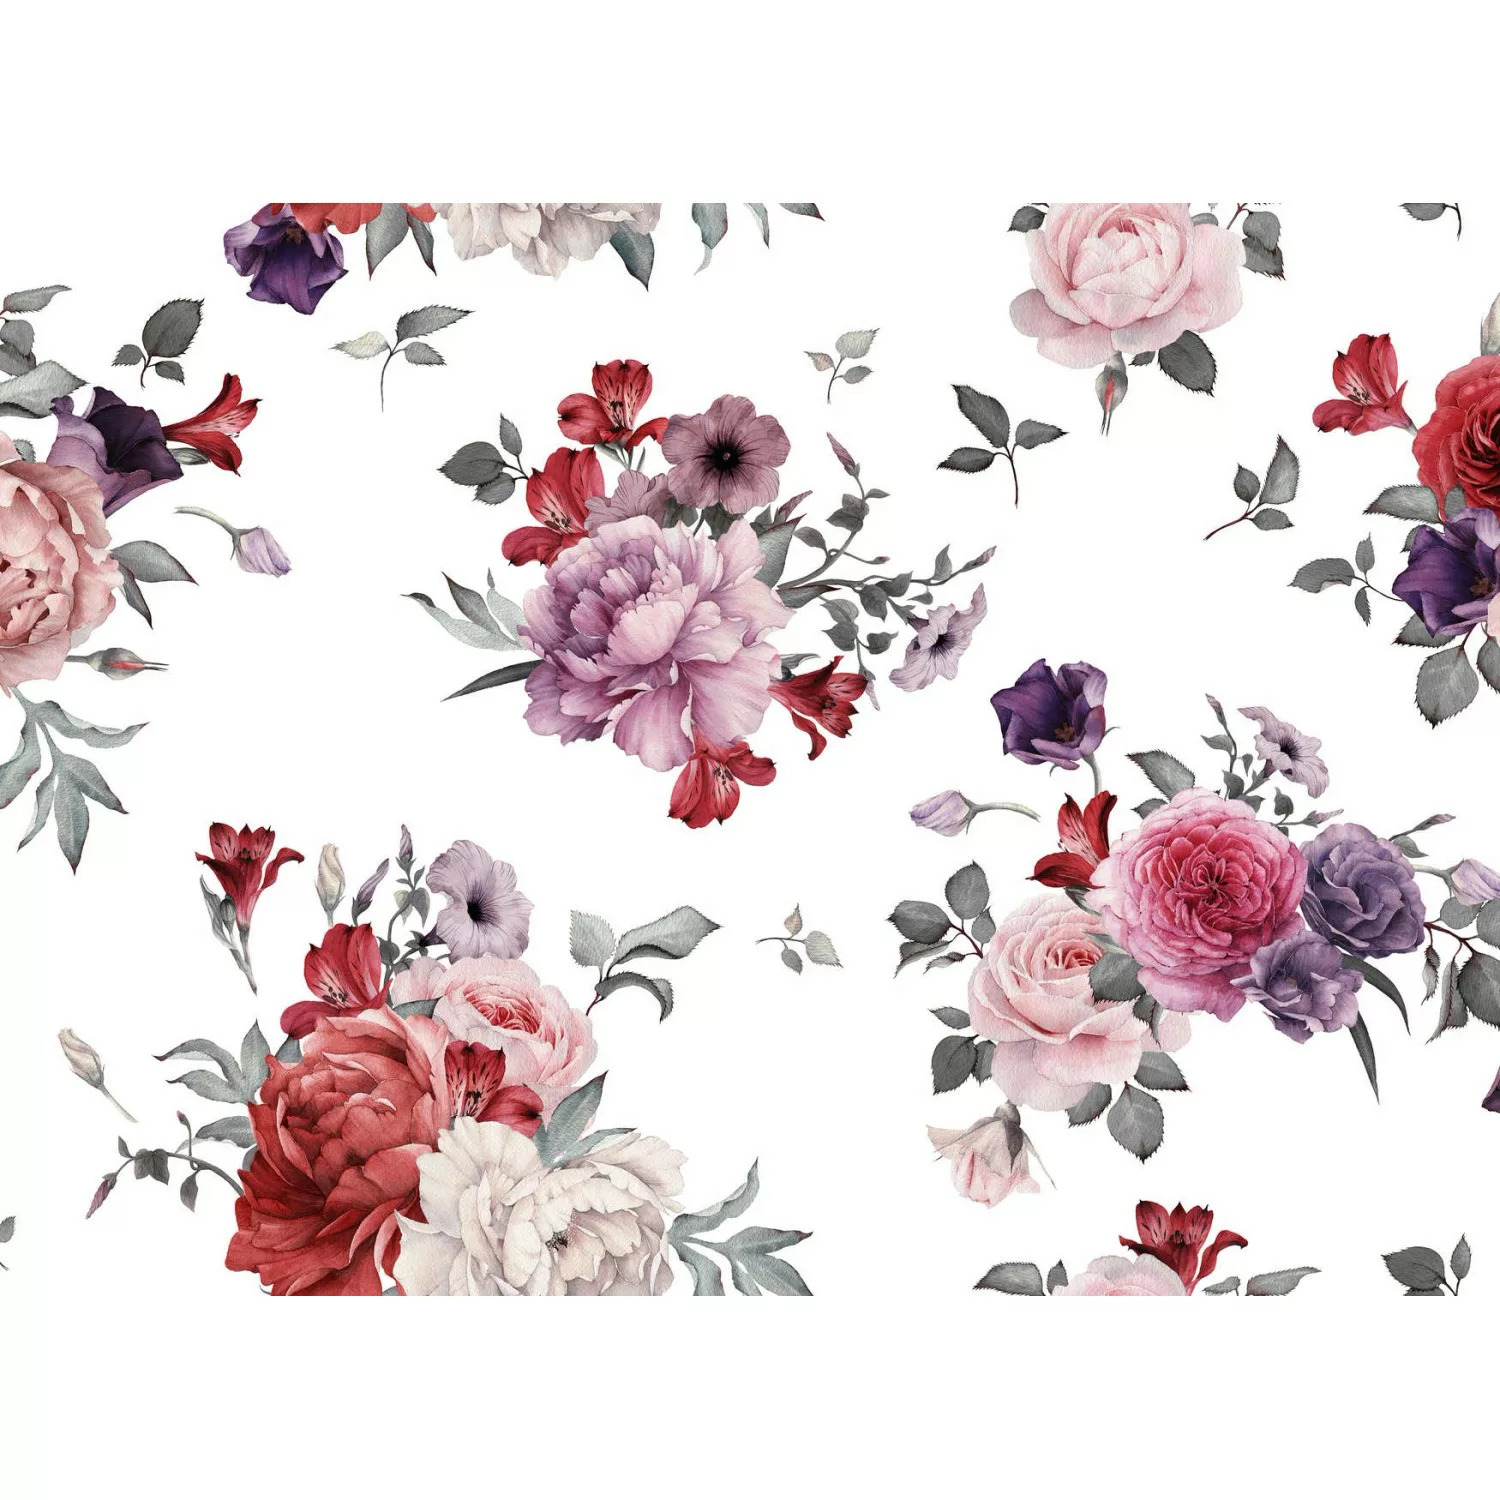 Fototapete Blumenbouquet Rot Rosa Lila Weiß 3,50 m x 2,55 m FSC® günstig online kaufen